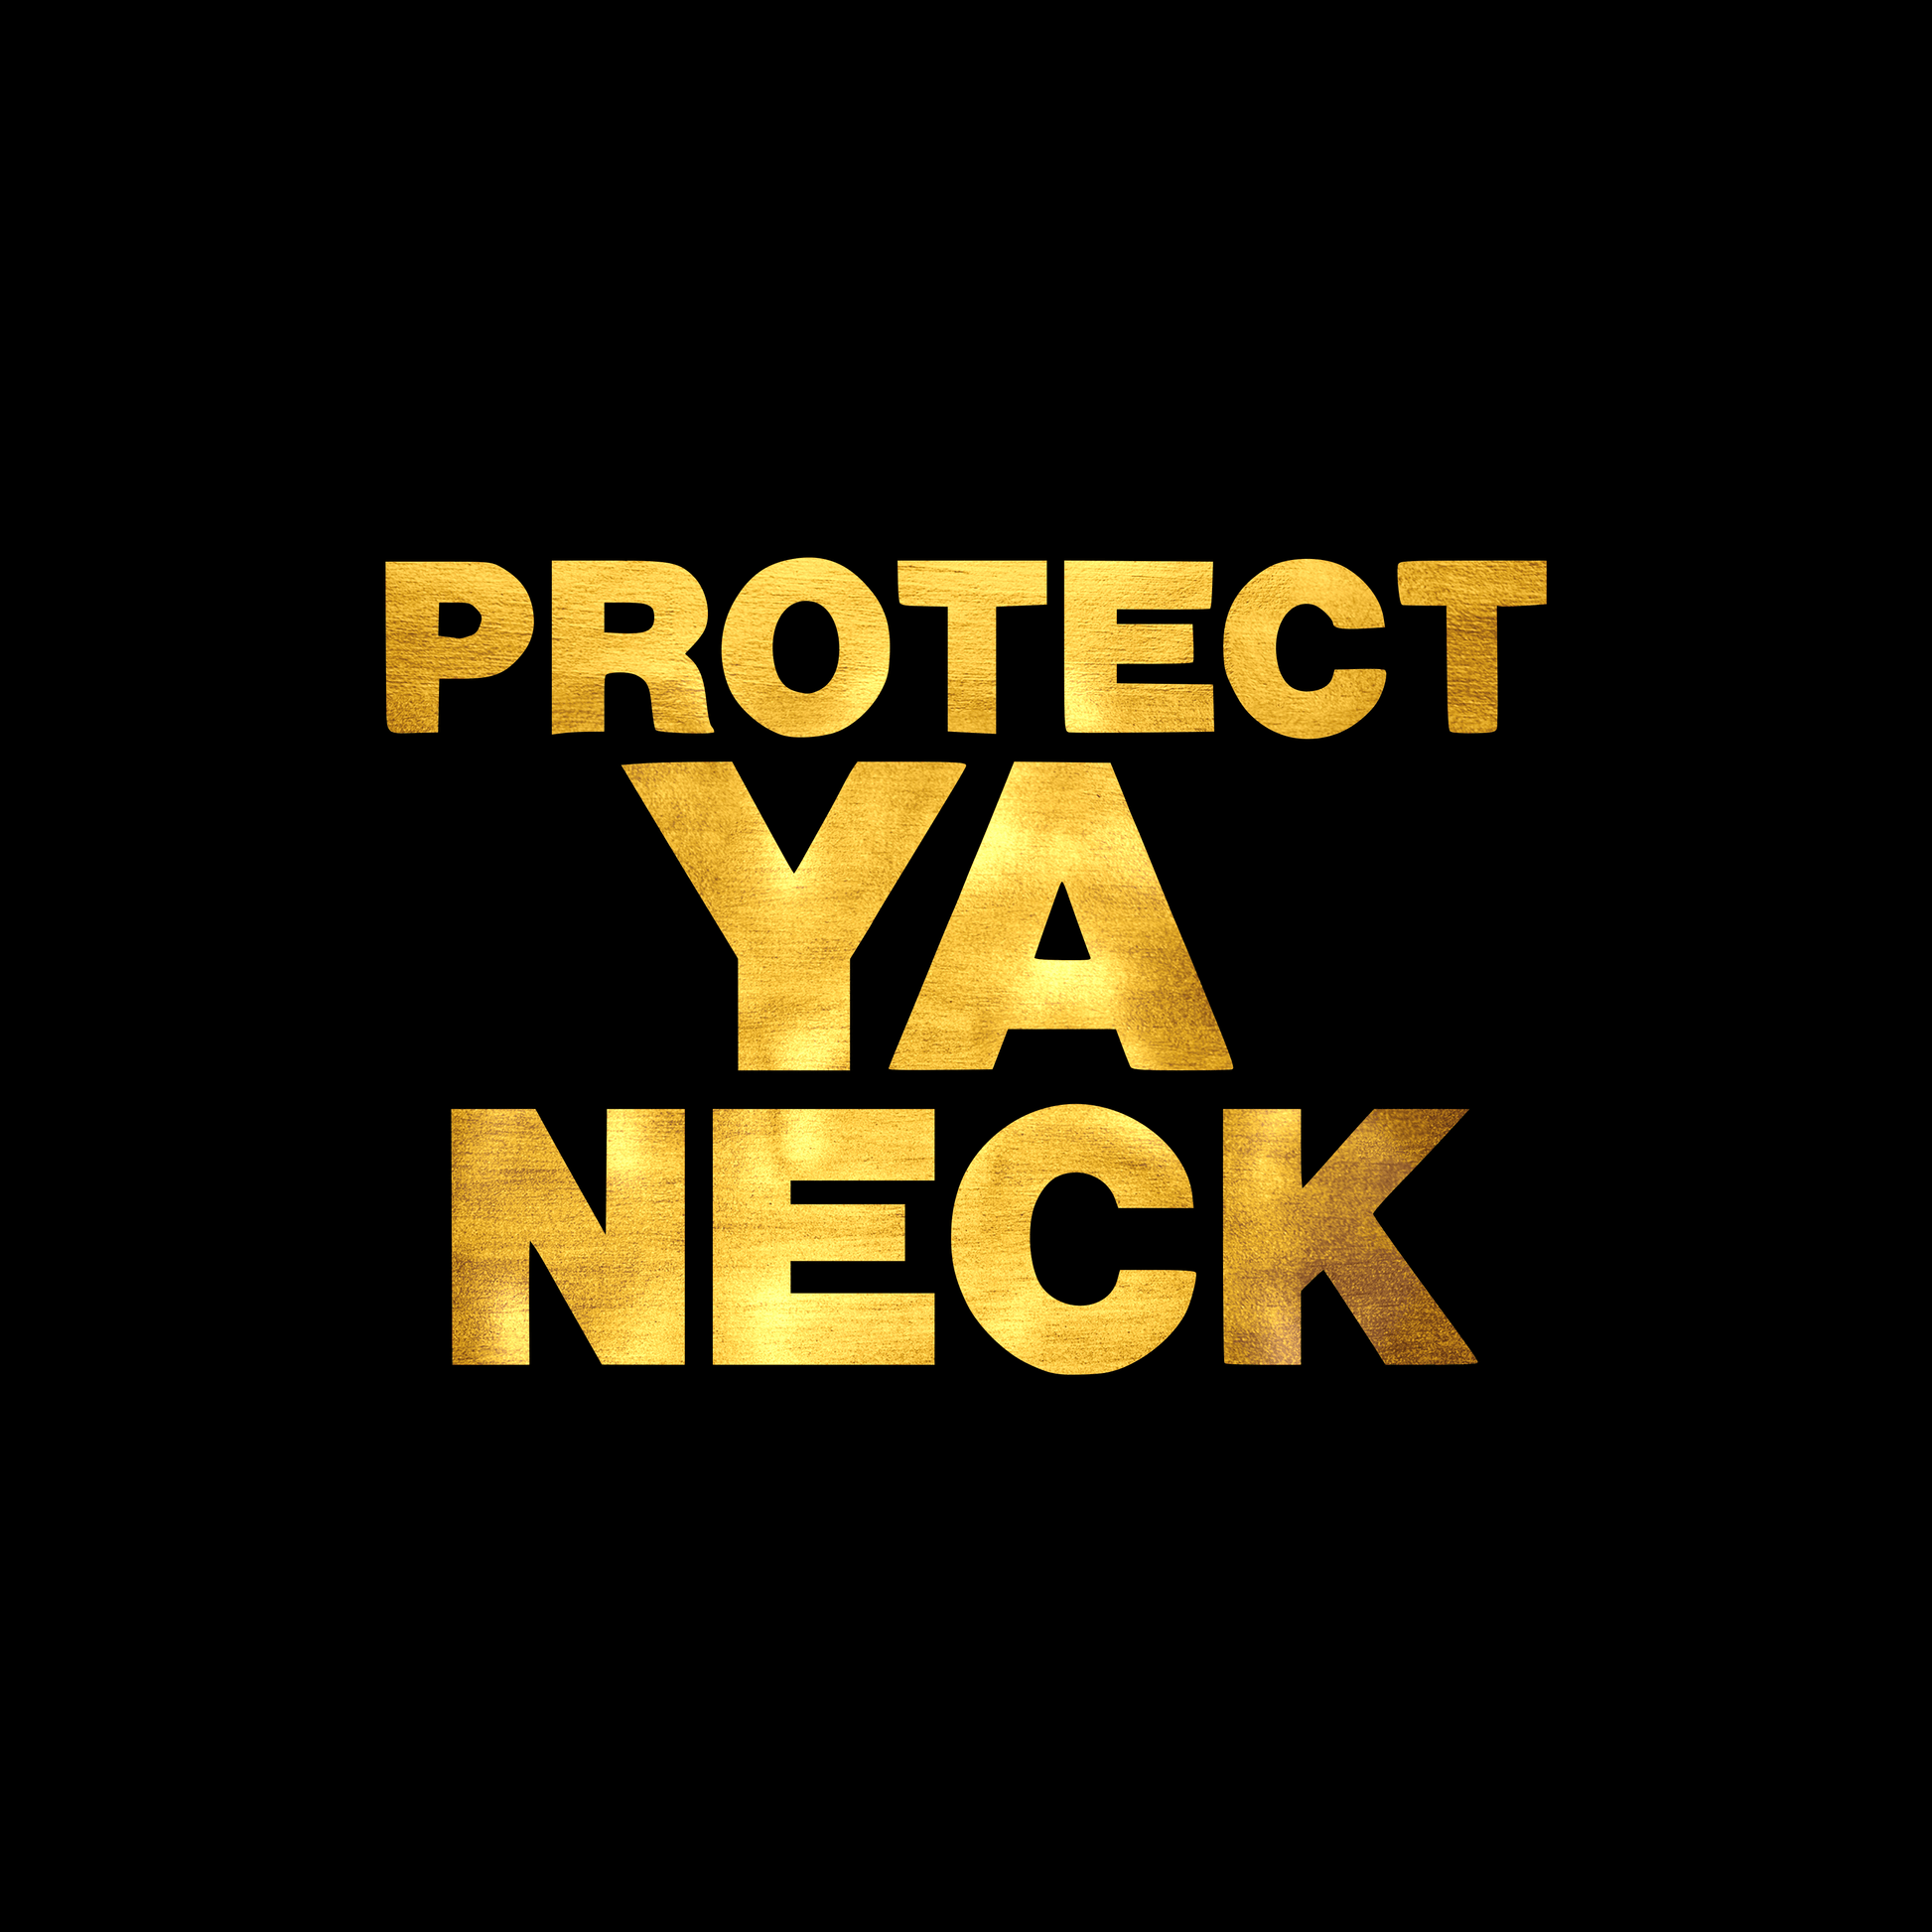 Protect ya neck sticker decal